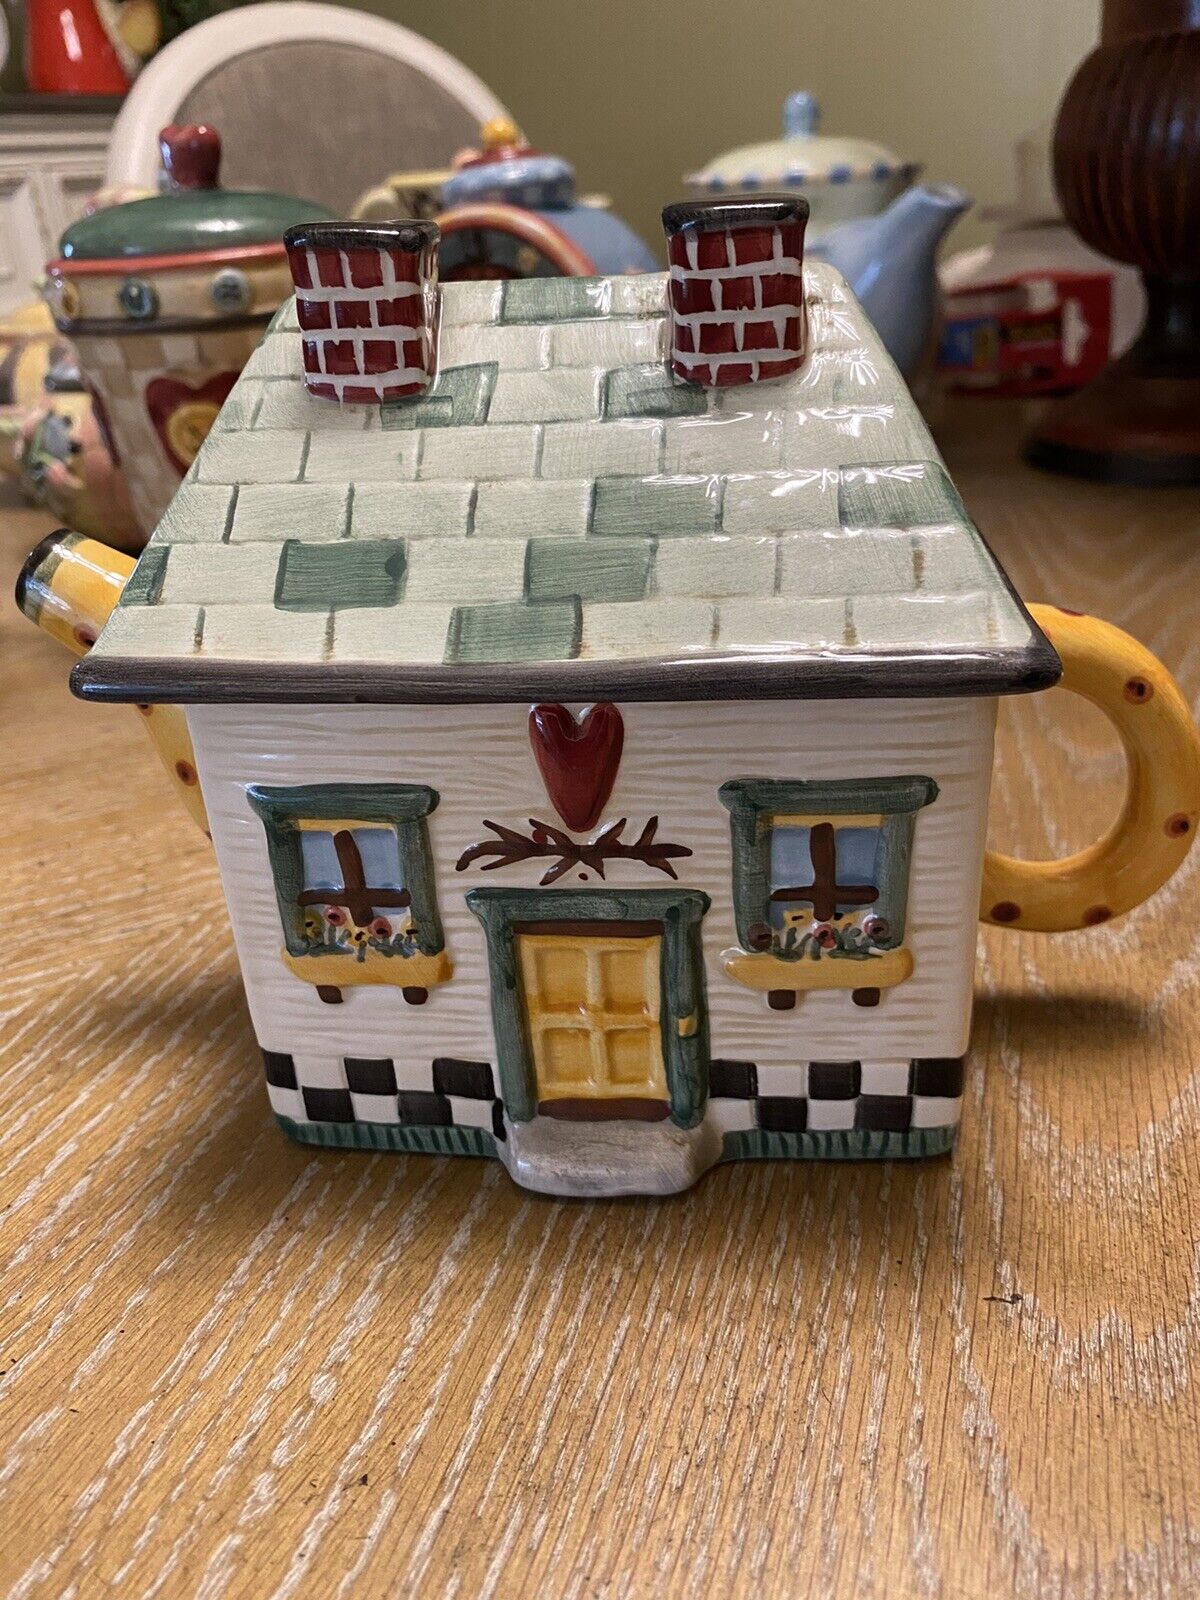 Sakura Debbie Mumm “Thoughts Of Home” Ceramic Teapot Collector Series